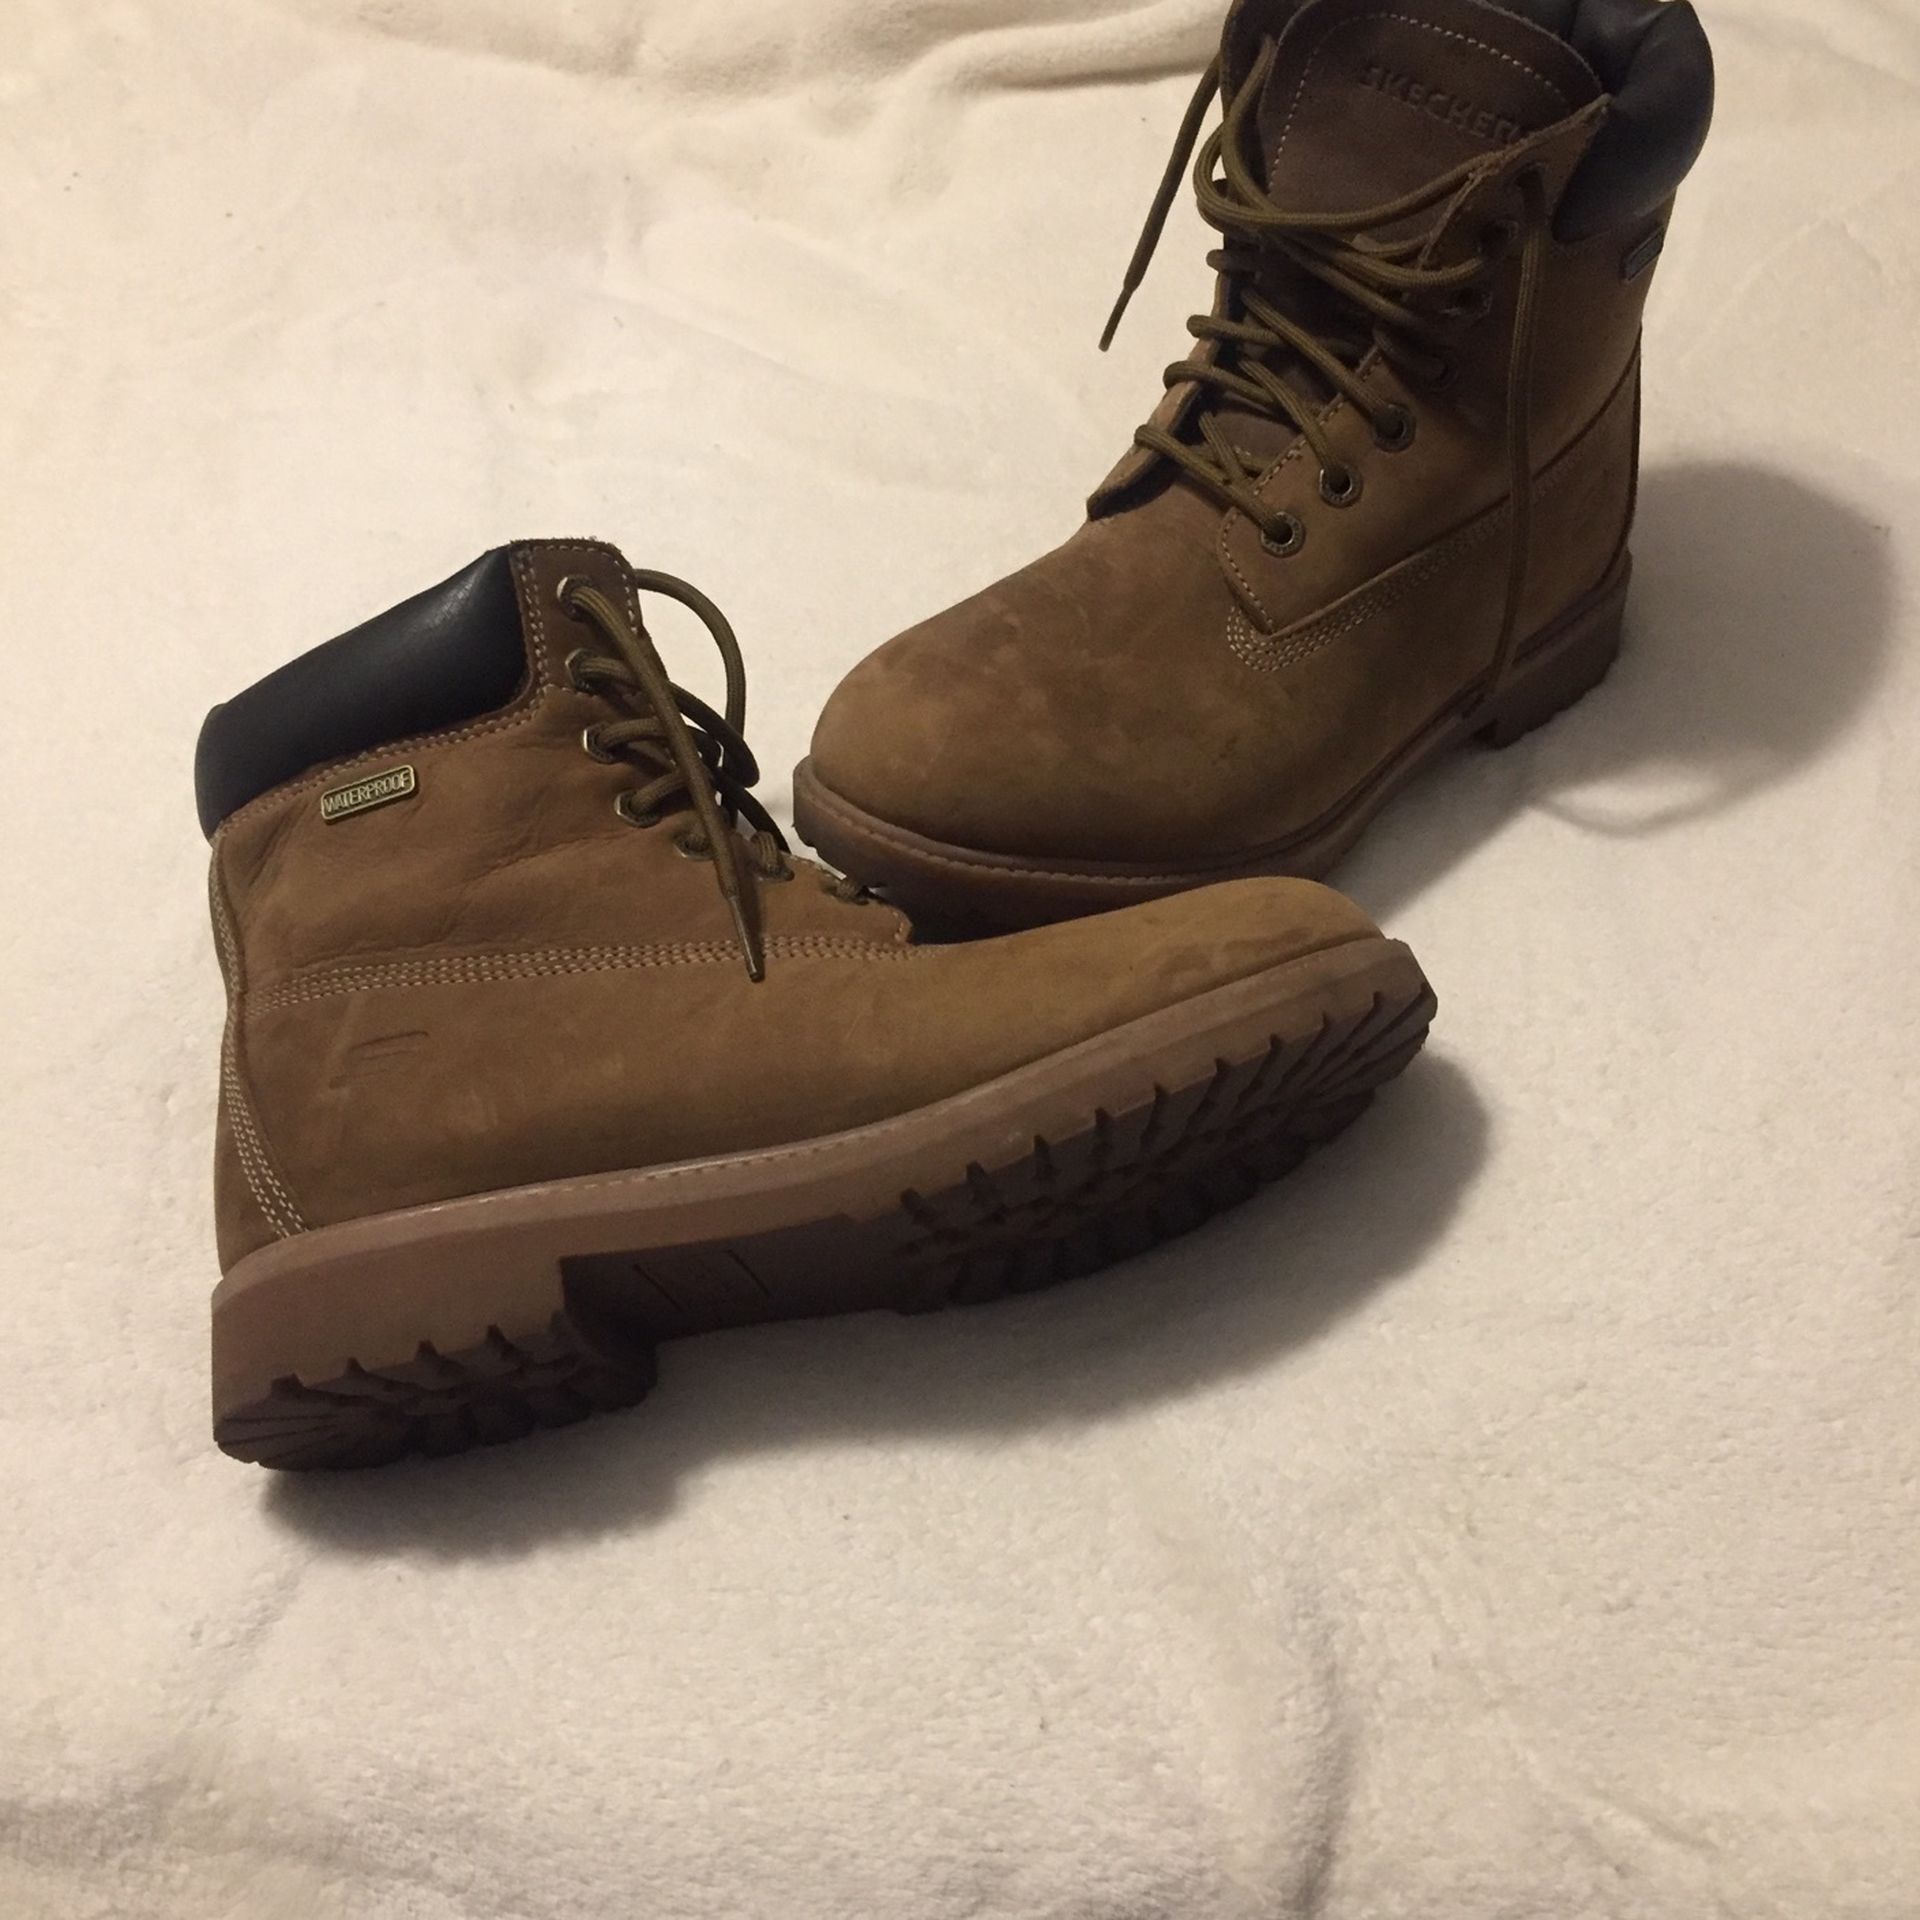 Women’s Skechers Size 11 Brown Work boots